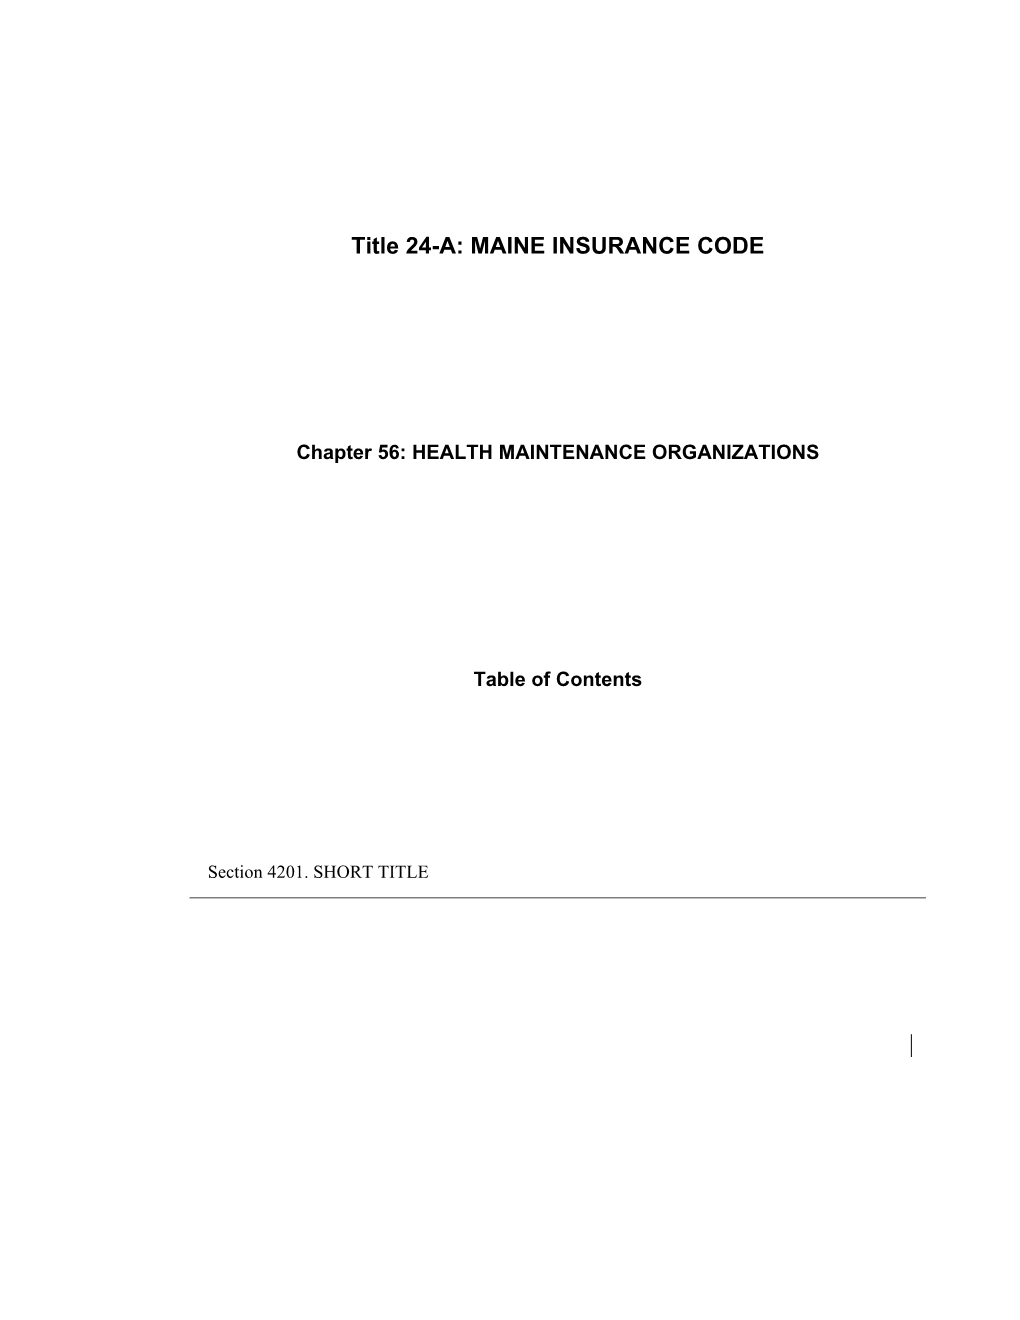 MRS Title 24-A, Chapter56: HEALTH MAINTENANCE ORGANIZATIONS